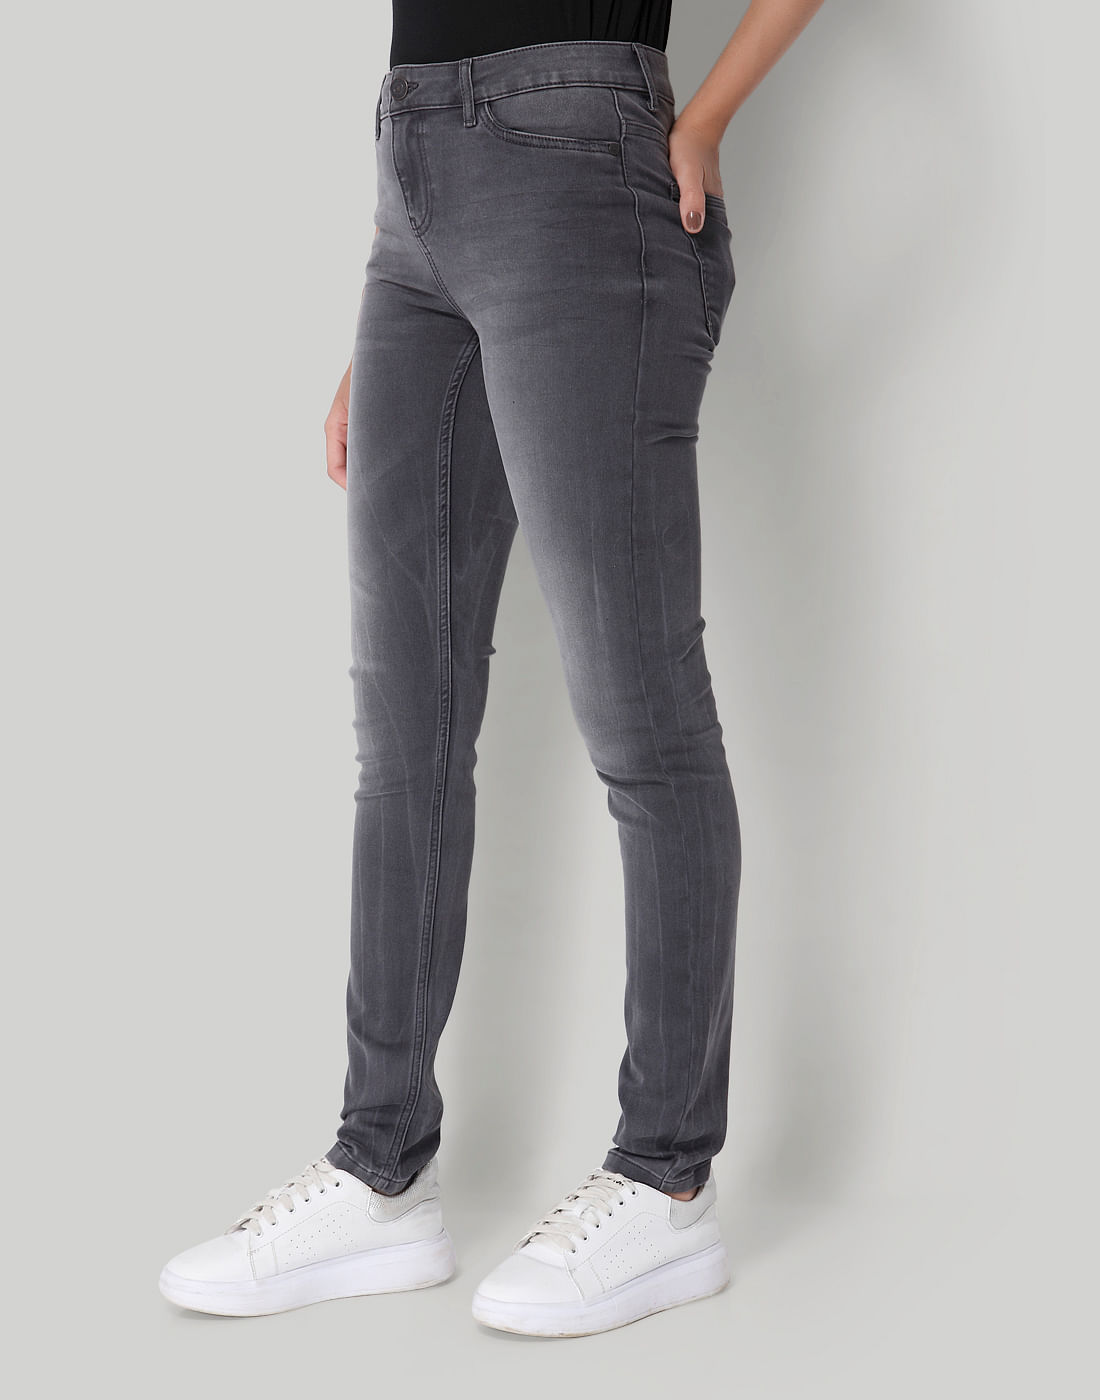 light grey slim fit jeans